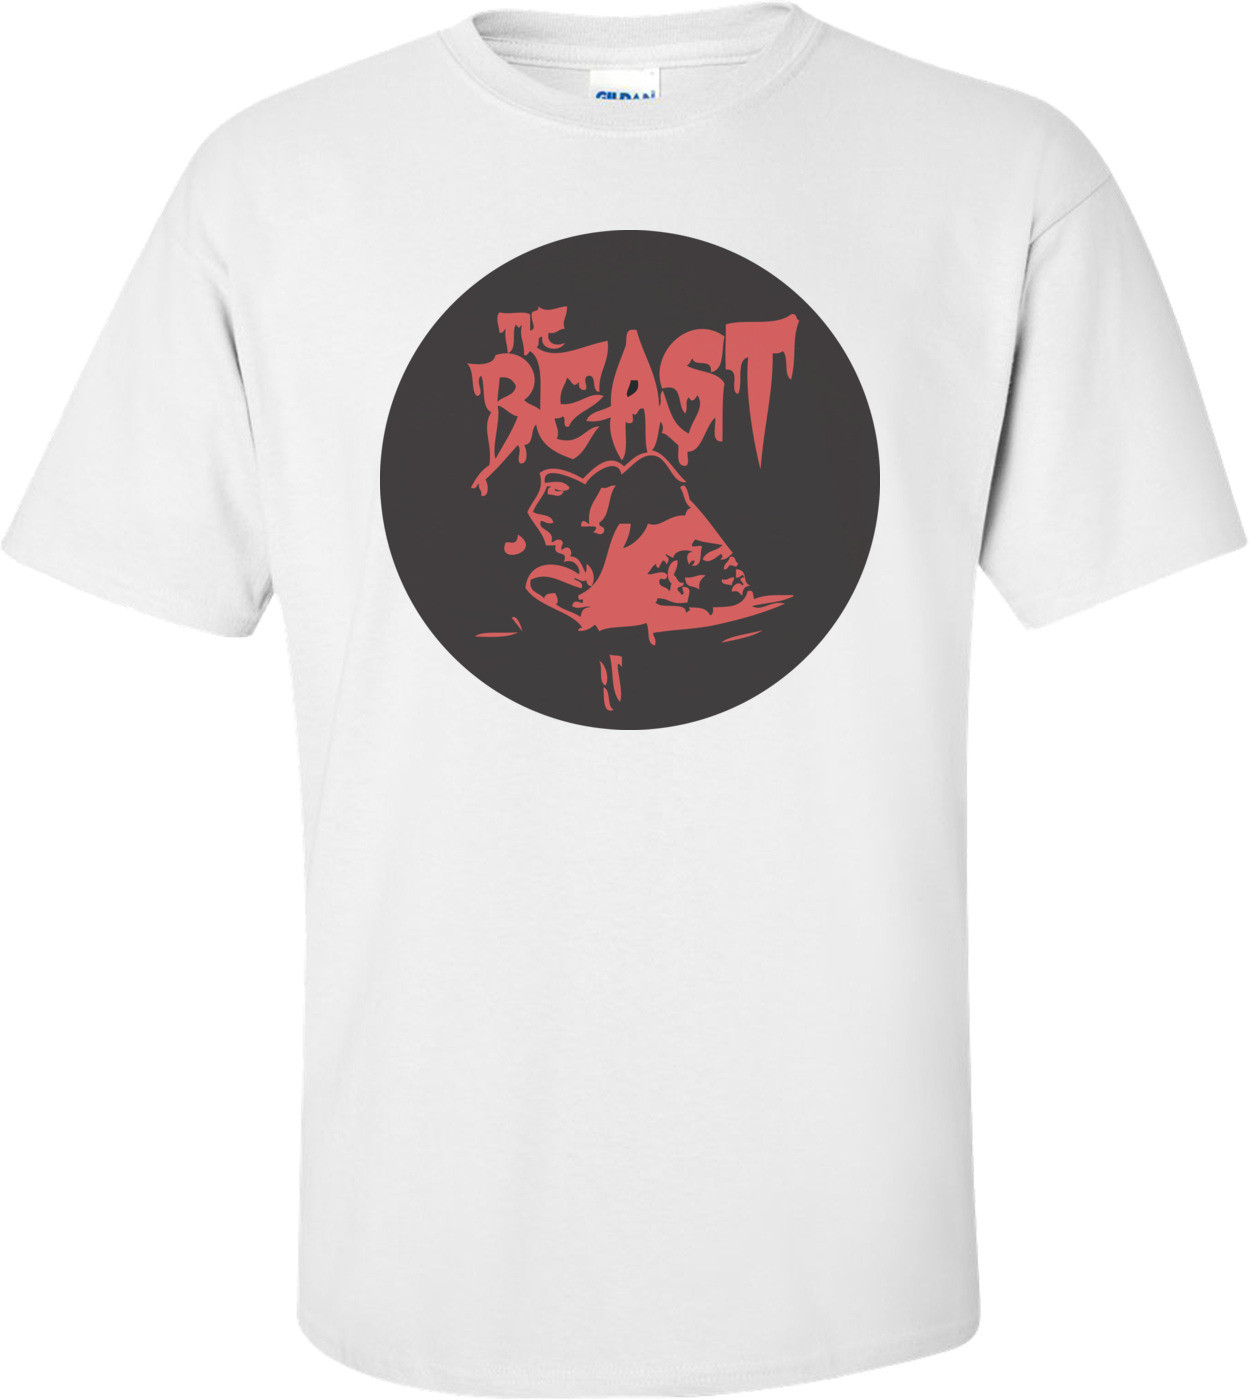 The Beast T-shirt